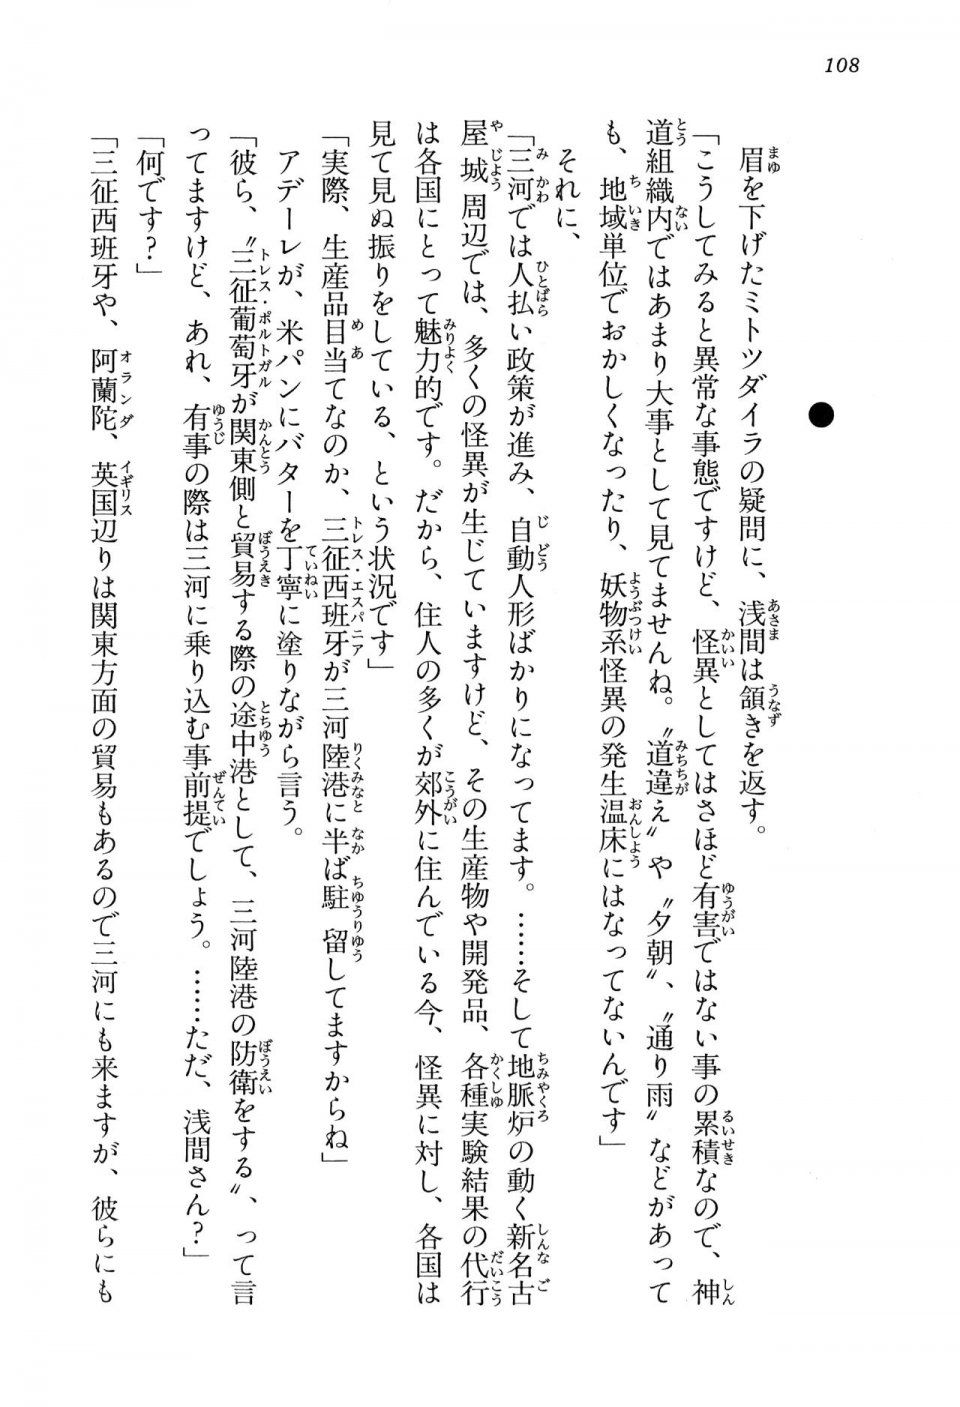 Kyoukai Senjou no Horizon BD Special Mininovel Vol 4(2B) - Photo #112